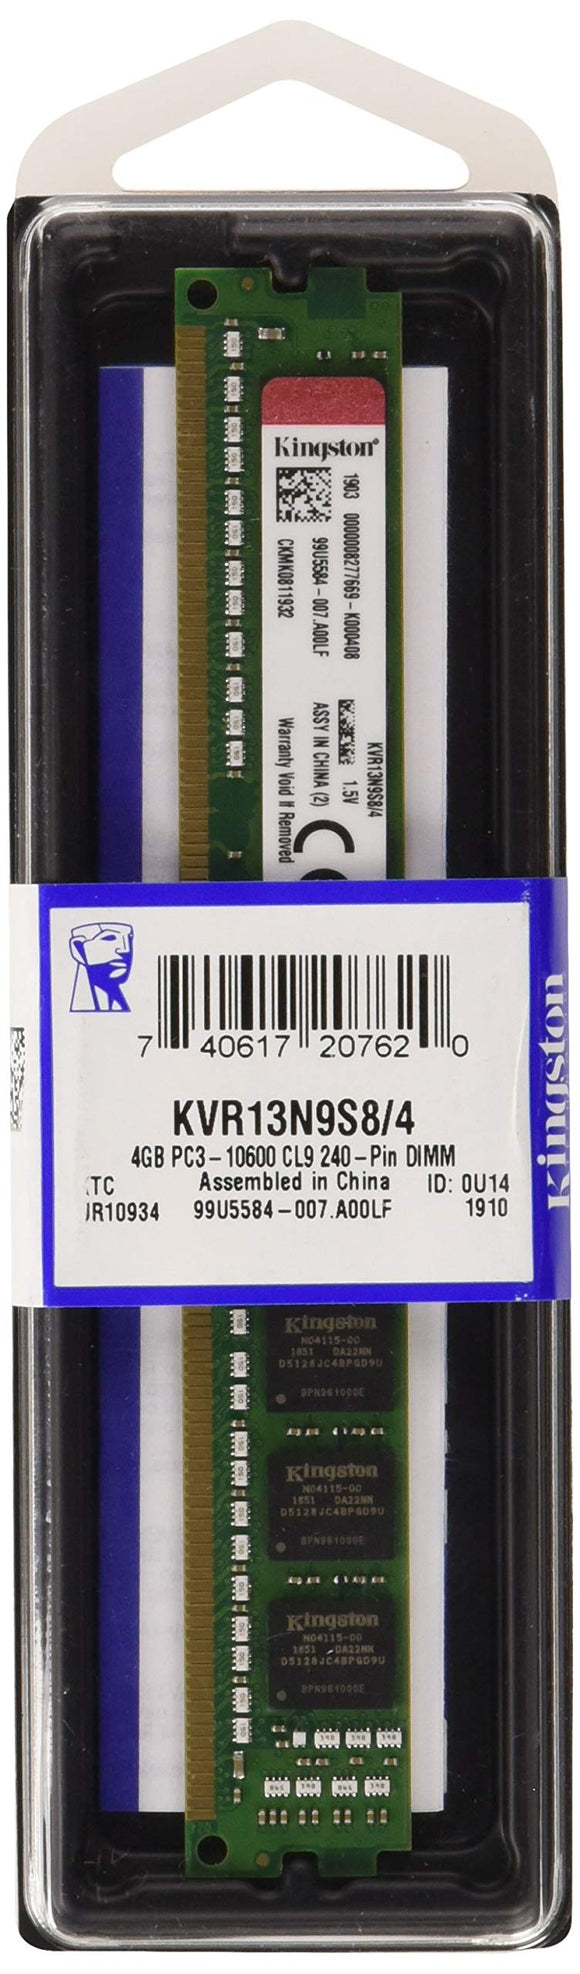 Kingston KVR13N9S8 / 4 SIMM RAM 4GB PC3-10600 Class 9